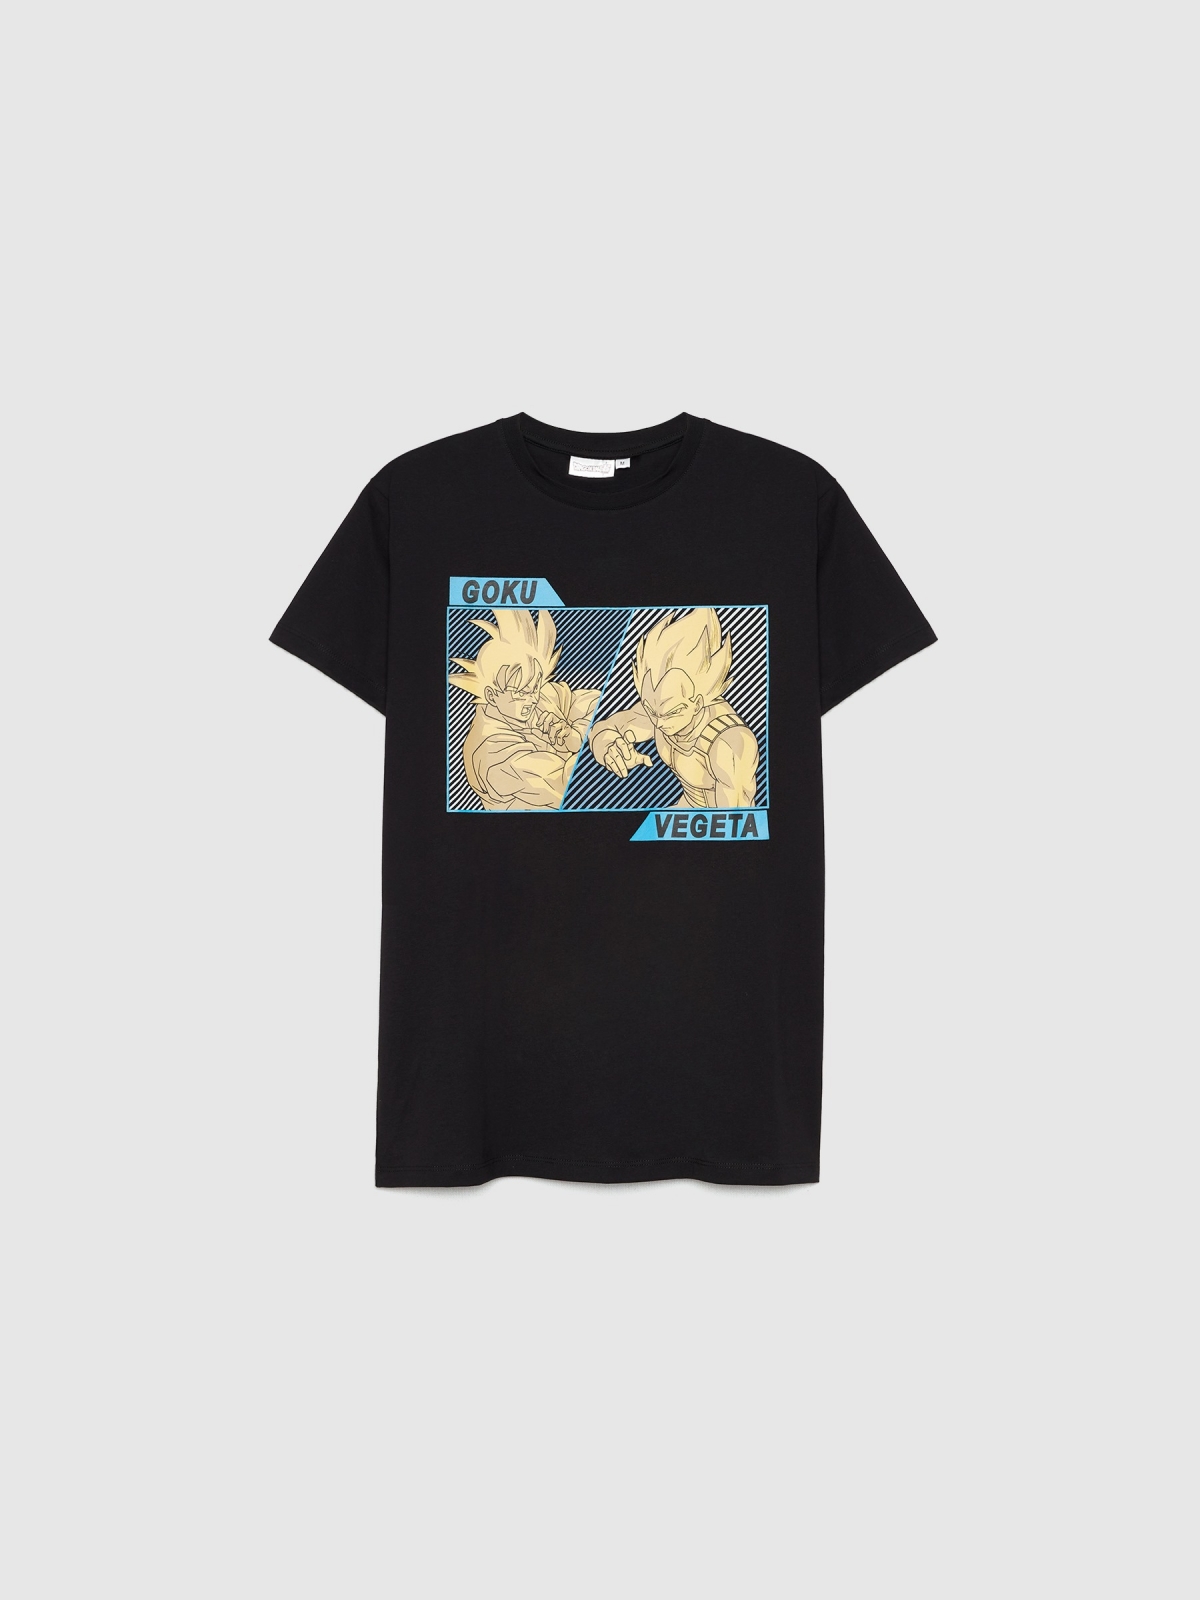  Goku vs Vegeta t-shirt black